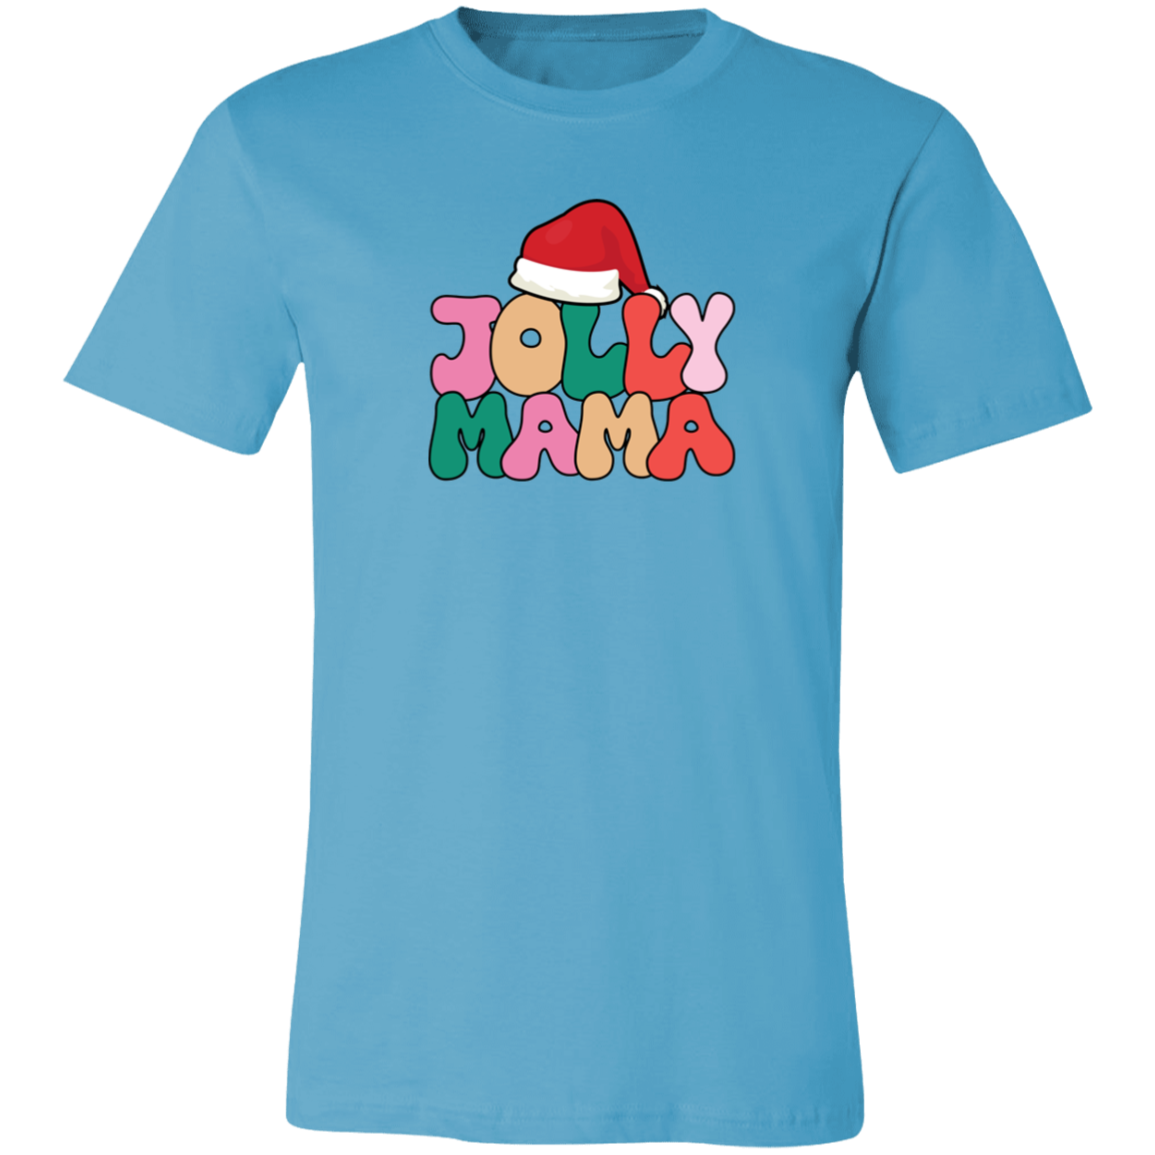 Jolly Mama Shirt